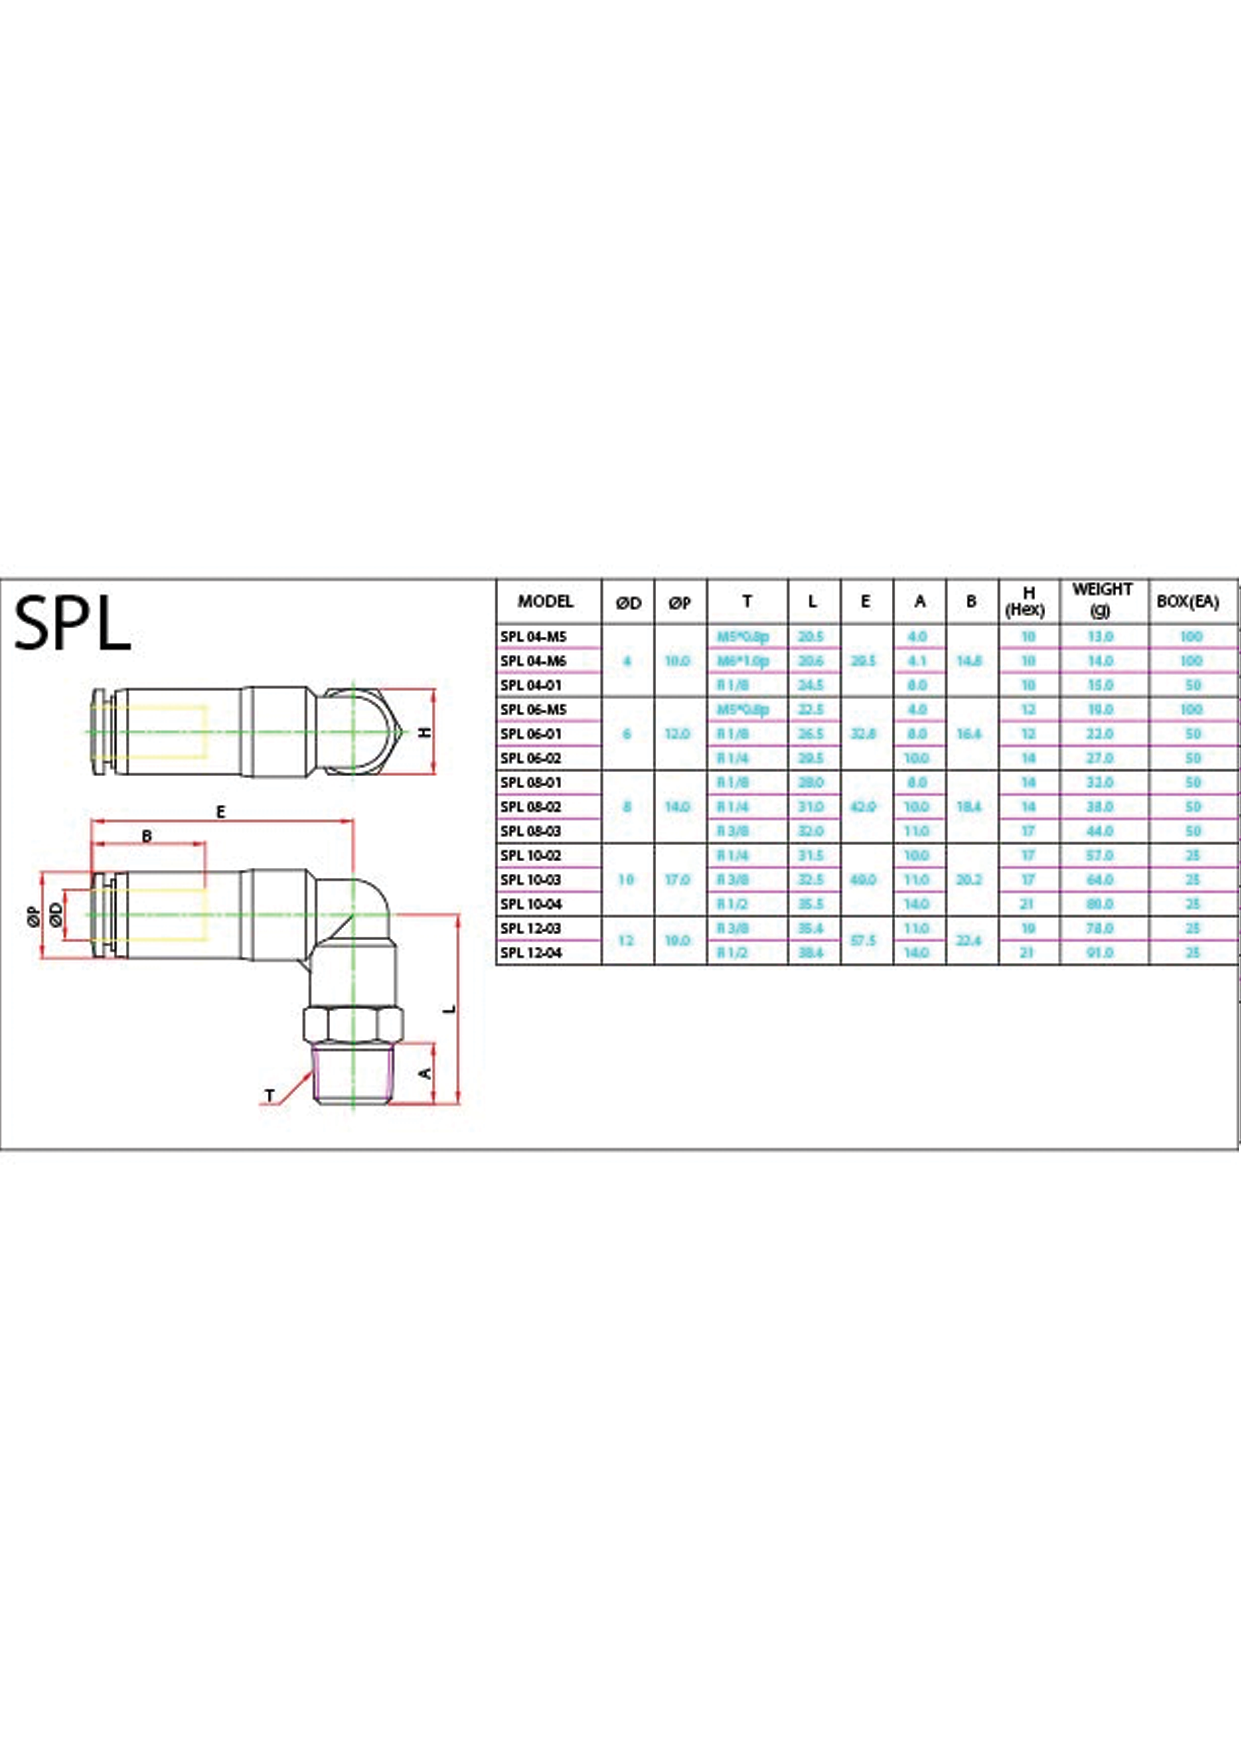 SPL (Metric) Data Sheet ( 115 KB )